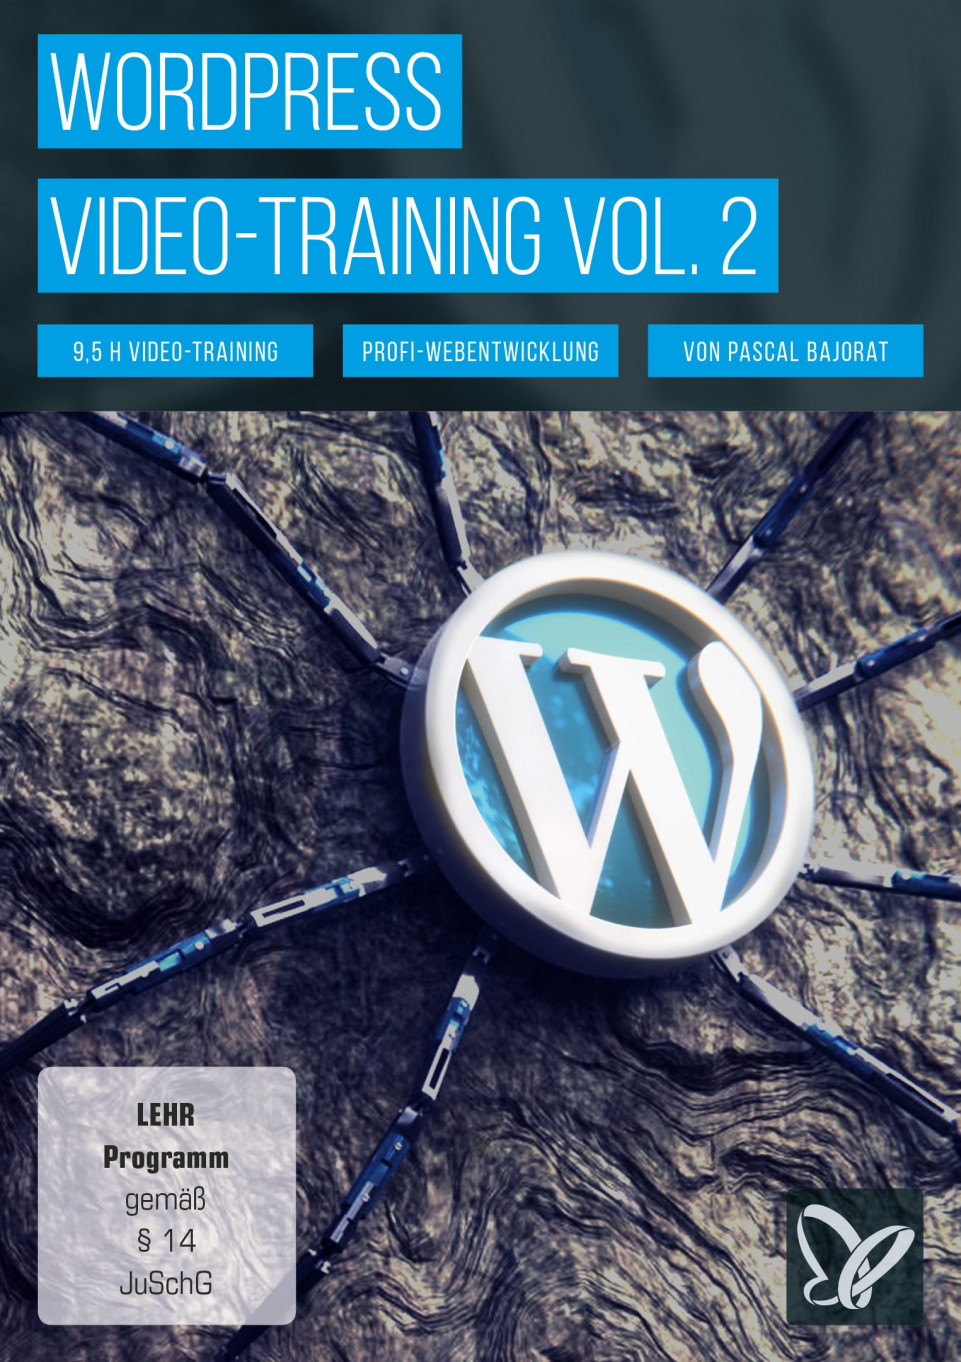 dynamic-assets/149/wordpress-video-training-vol-2--onix